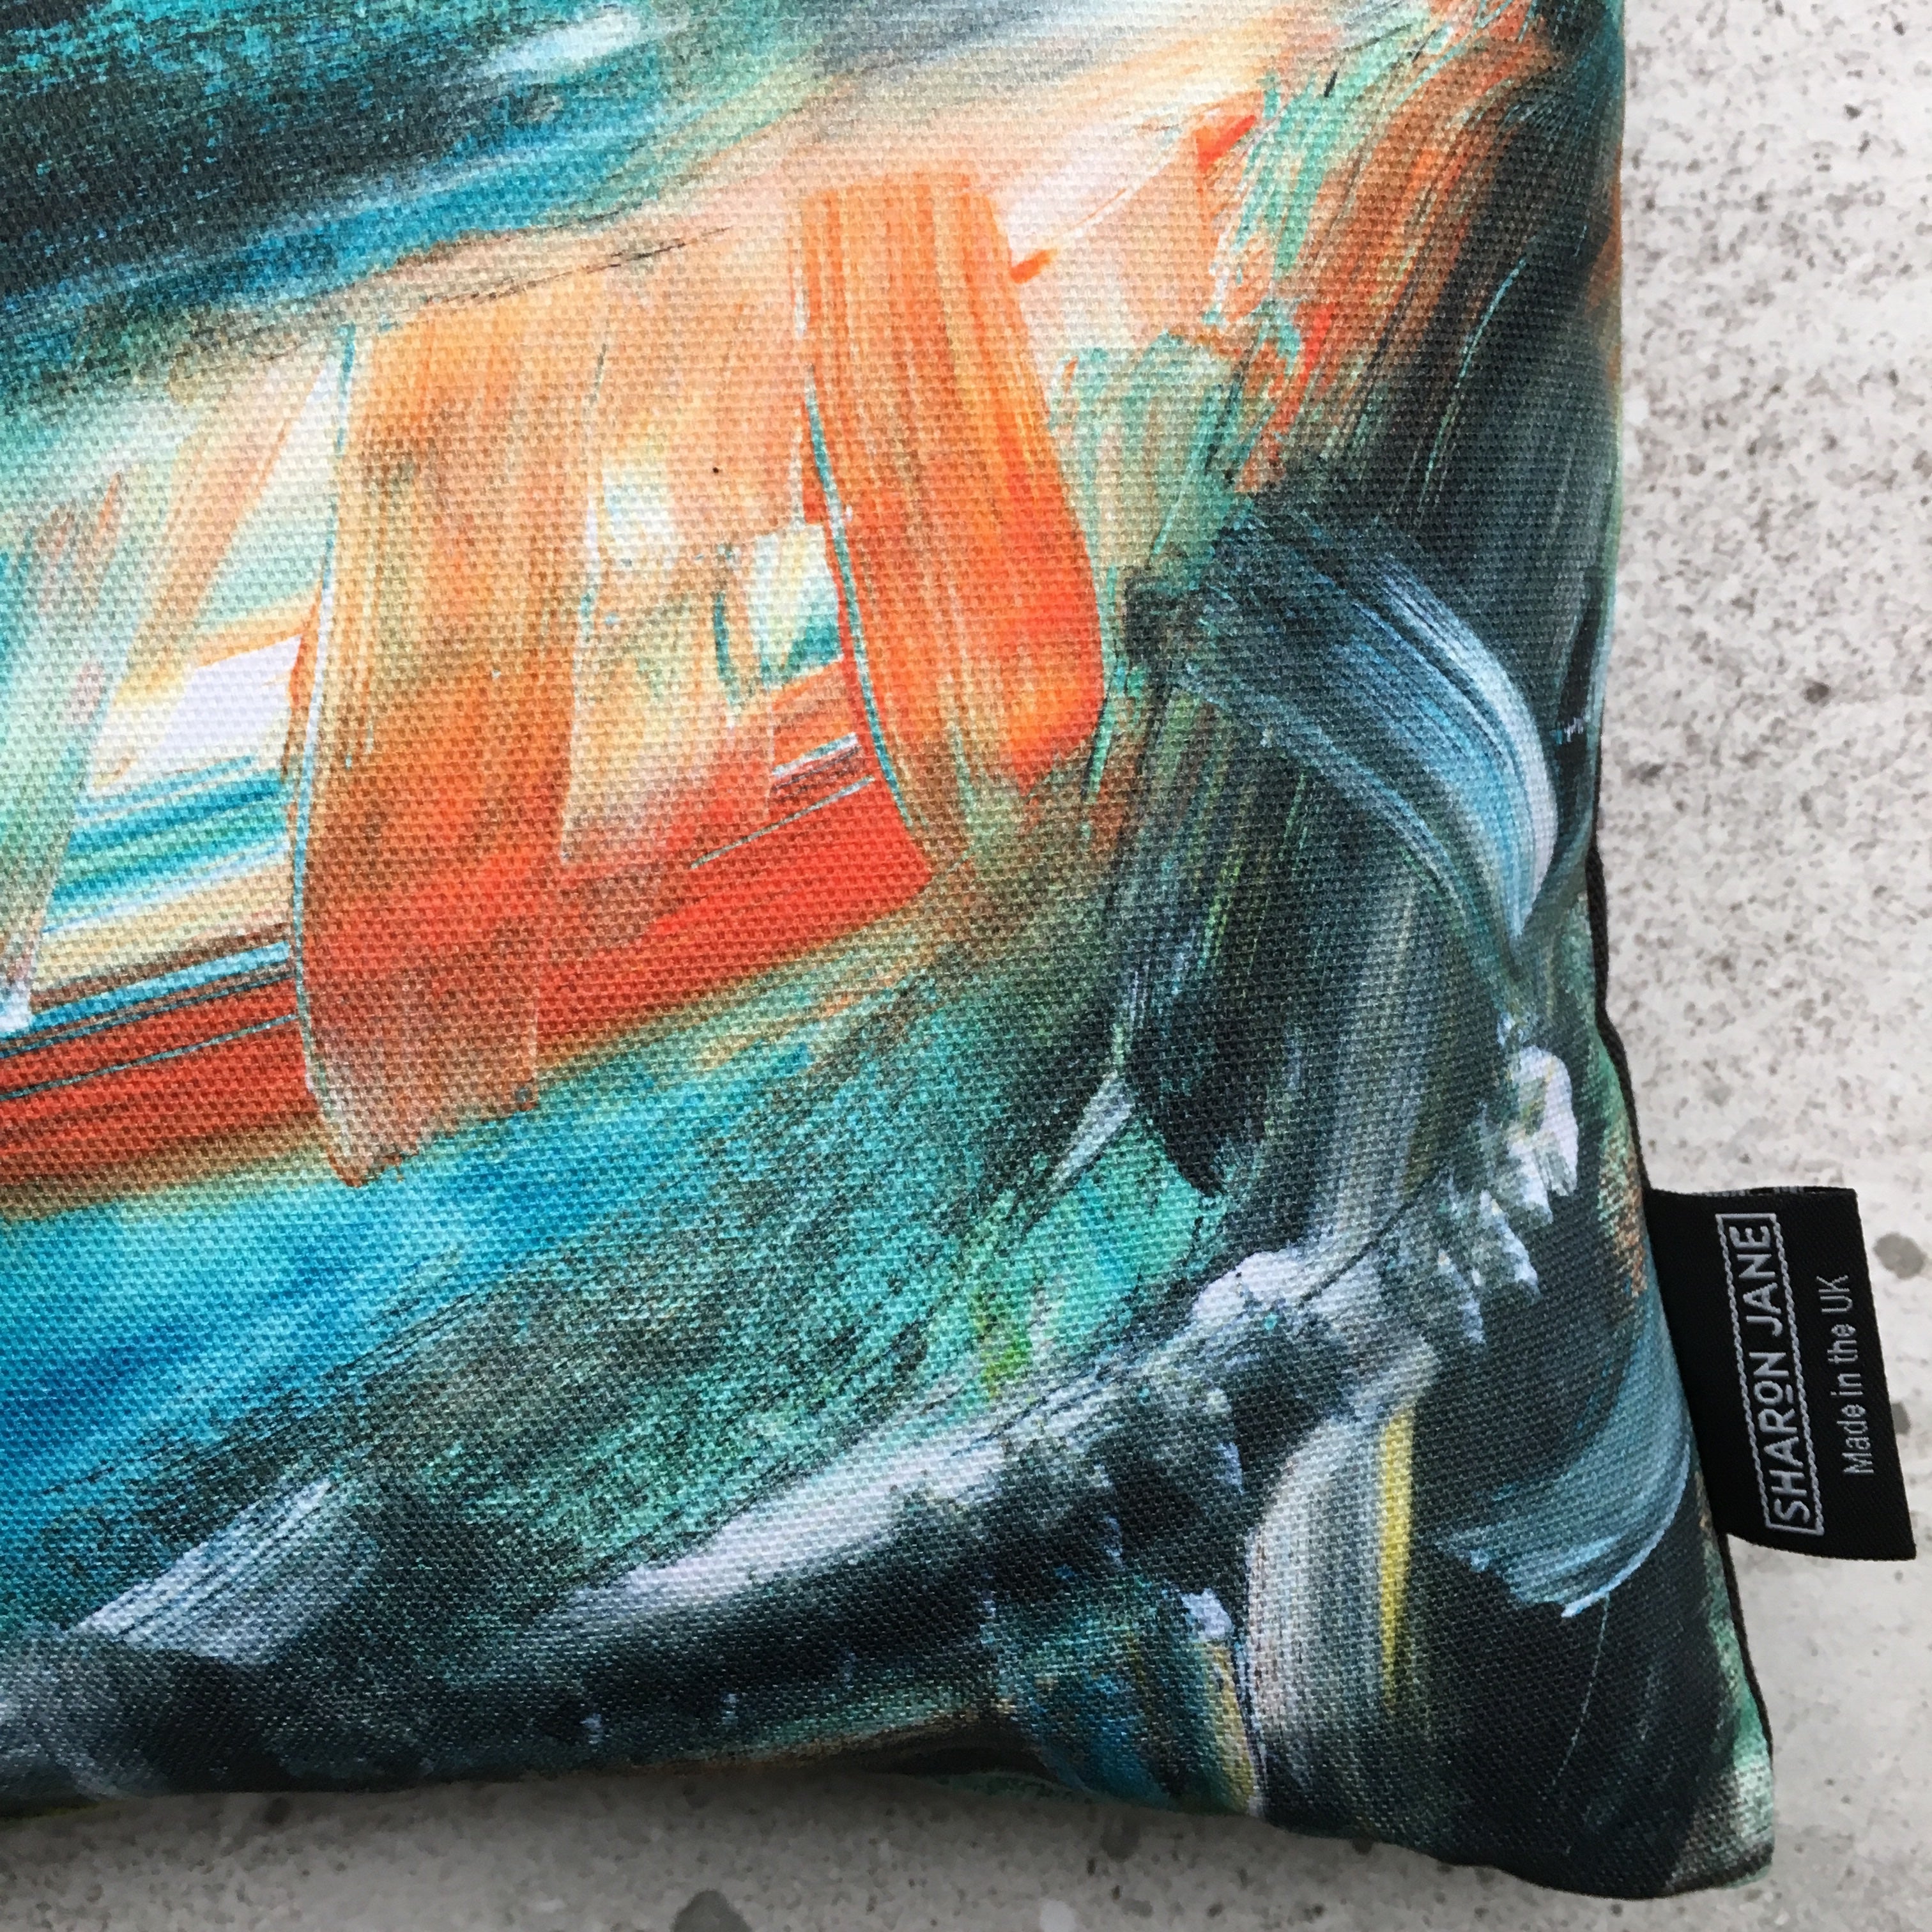 Painterly Multi-Colour Mini Cushion